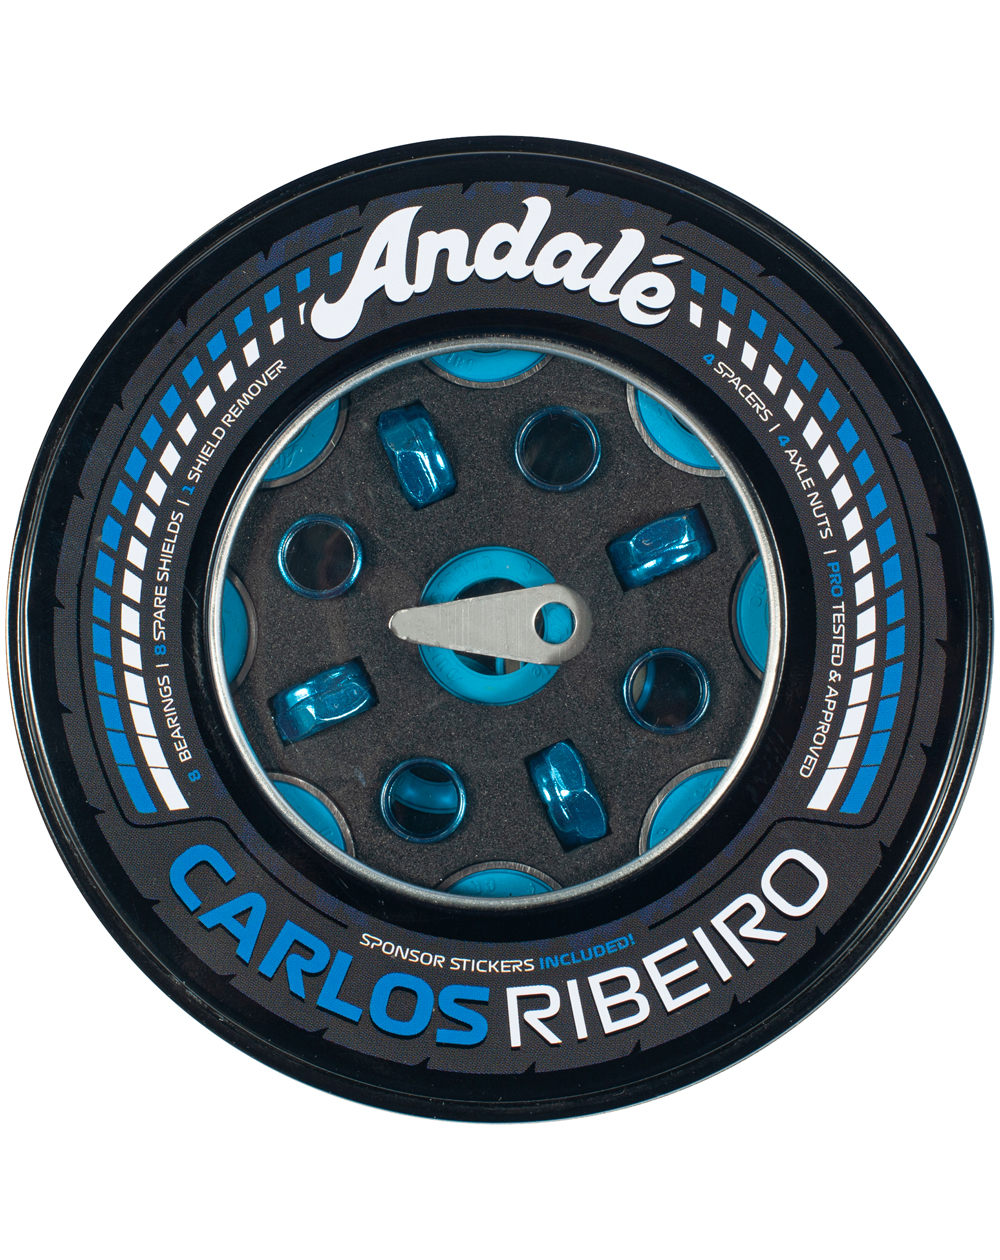 Andalé Carlos Ribeiro Pro Skateboard Bearings